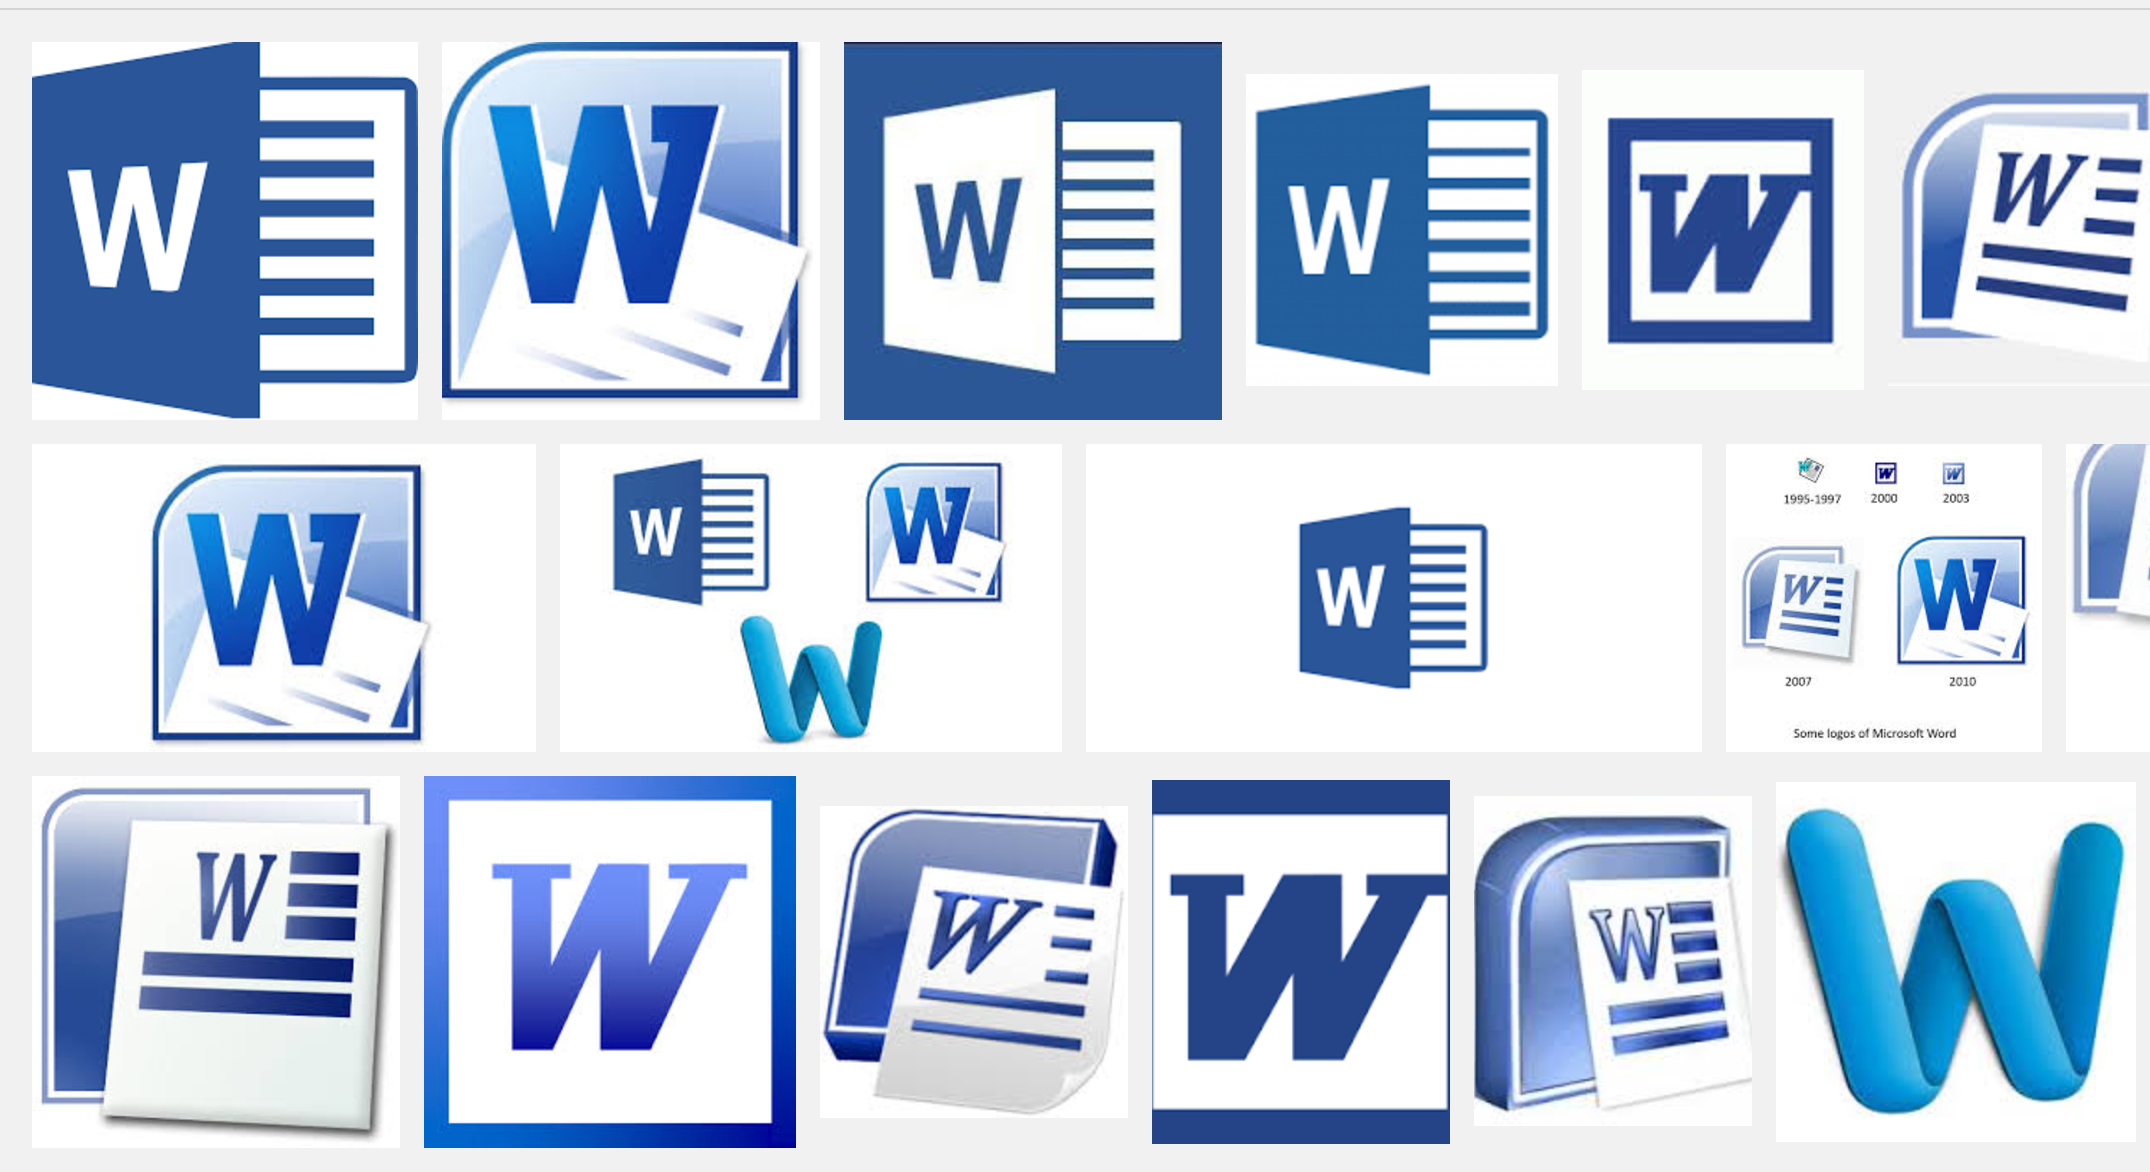 Ворд велл. Значок Microsoft Office Word. Текстовый процессор Microsoft Office Word. Картинки для ворда. Значок Word 2007.